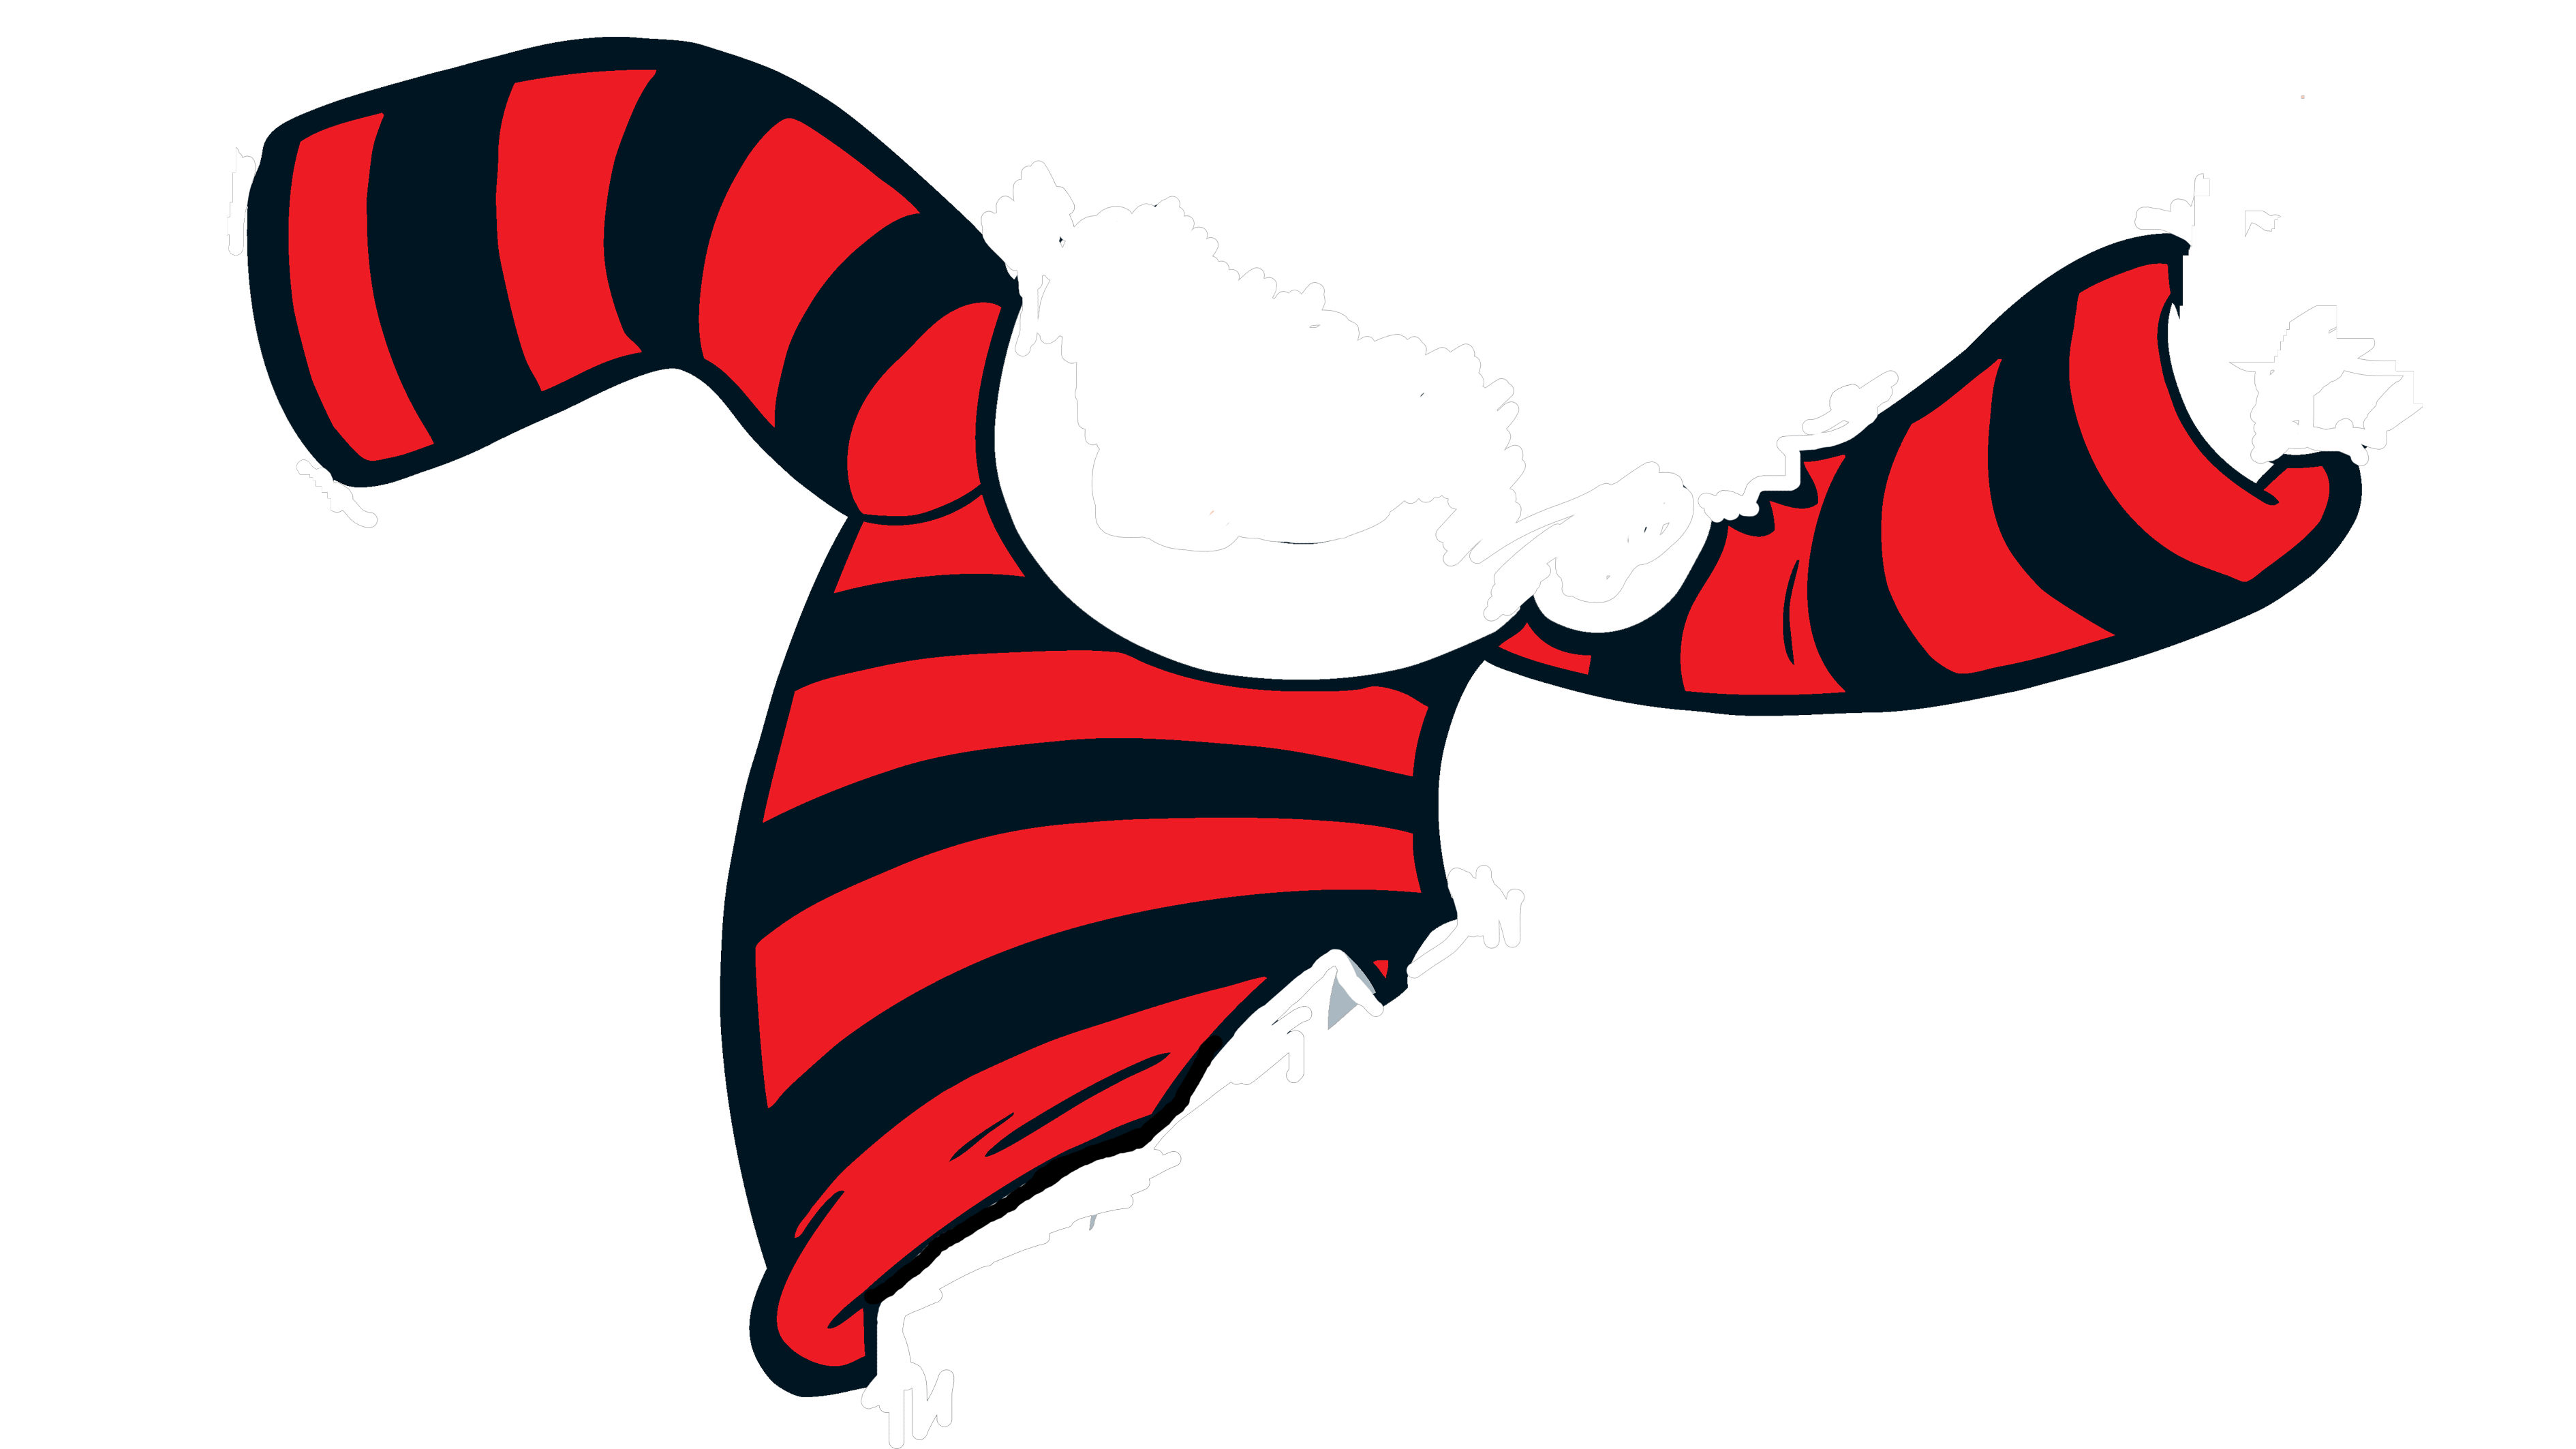 A red and black stripe jumper